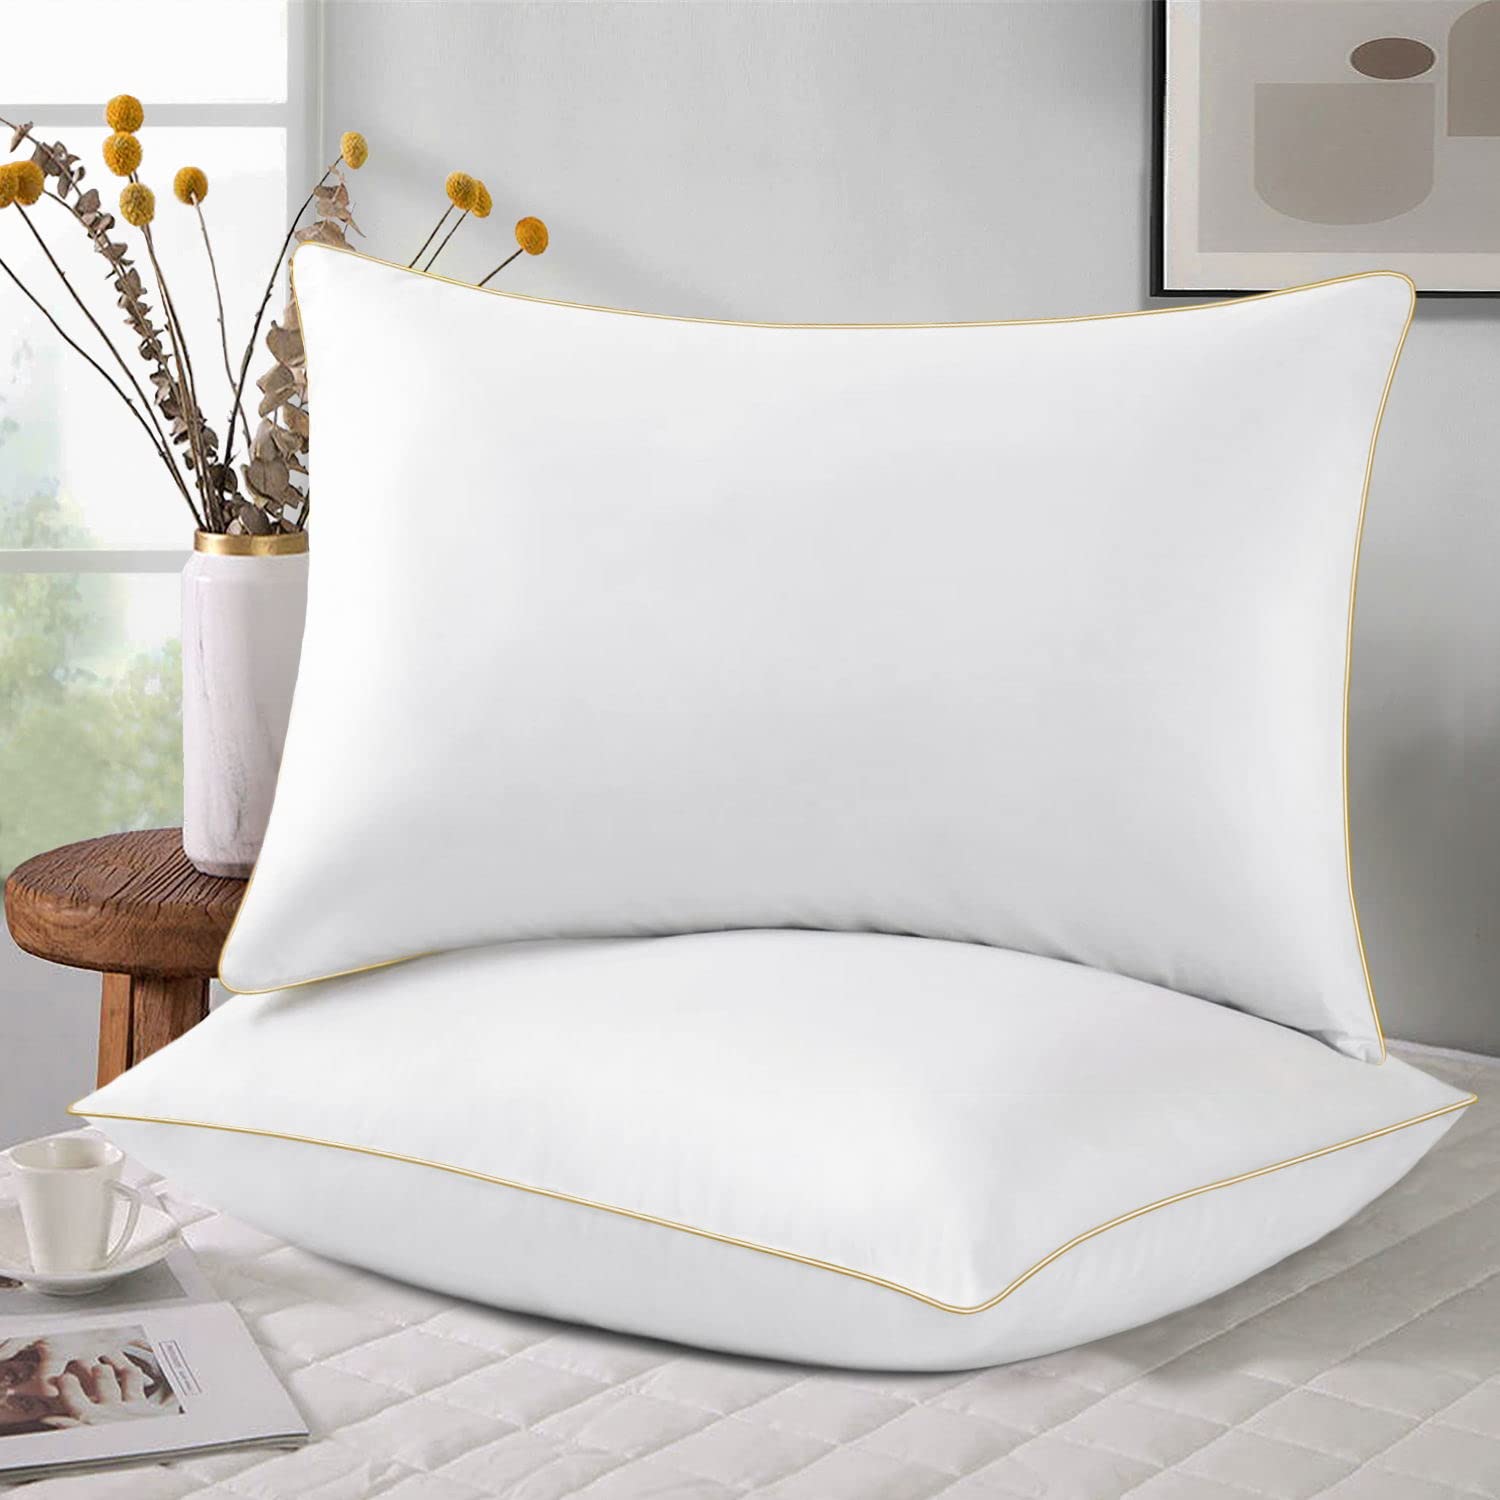 Mislili Pillows King Size Set of 2, Luxury Soft King Size Pillows, Hotel Collection Bed Pillows for Sleeping, Down Alternative Filling B